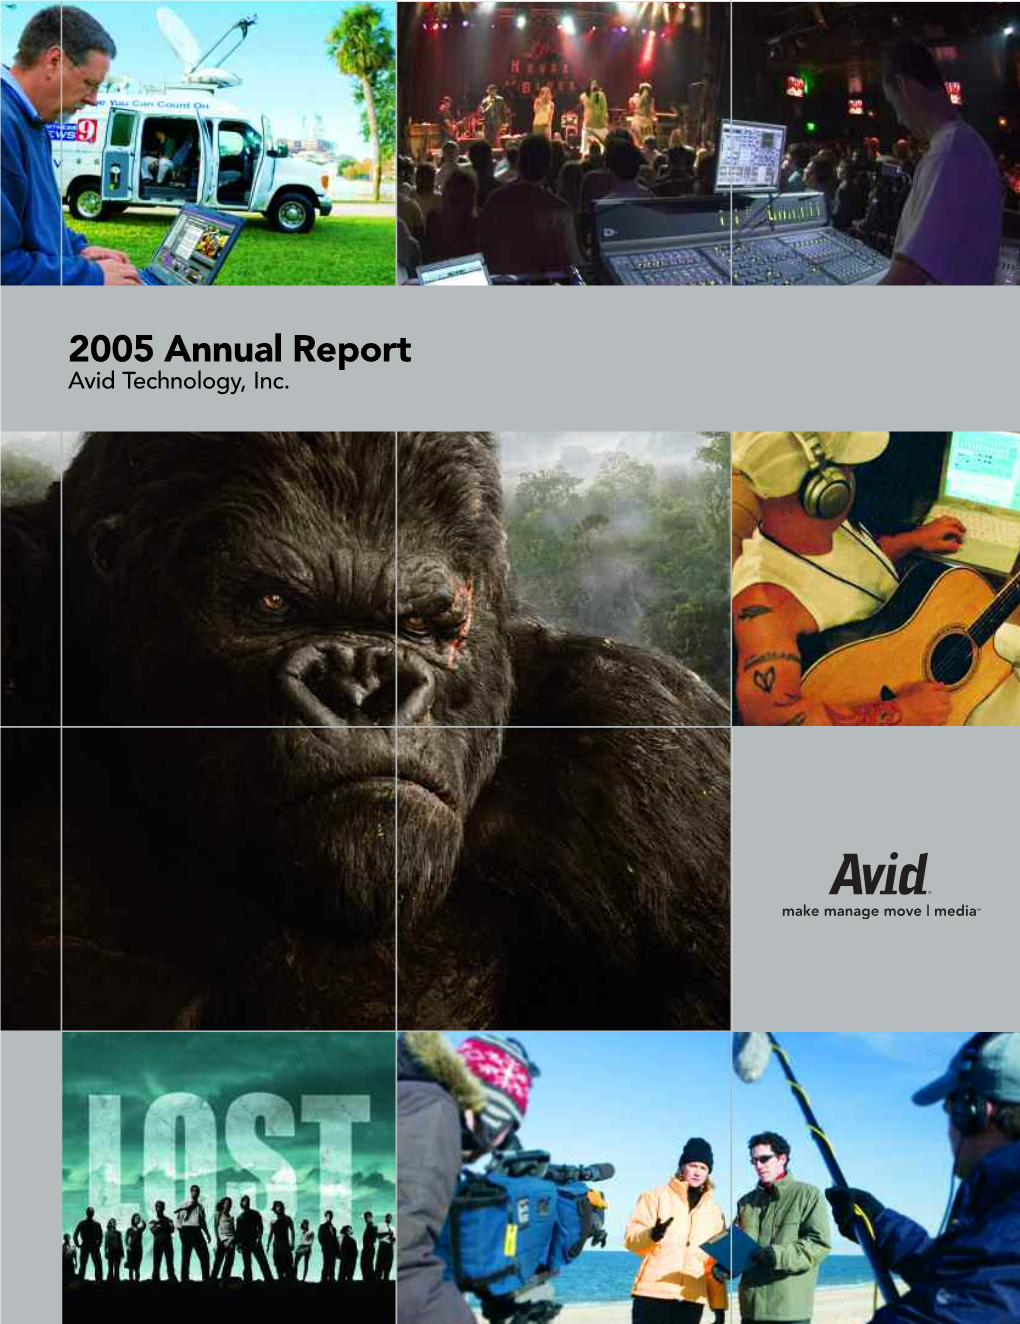 2005 Annual Report Avid Technology, Inc